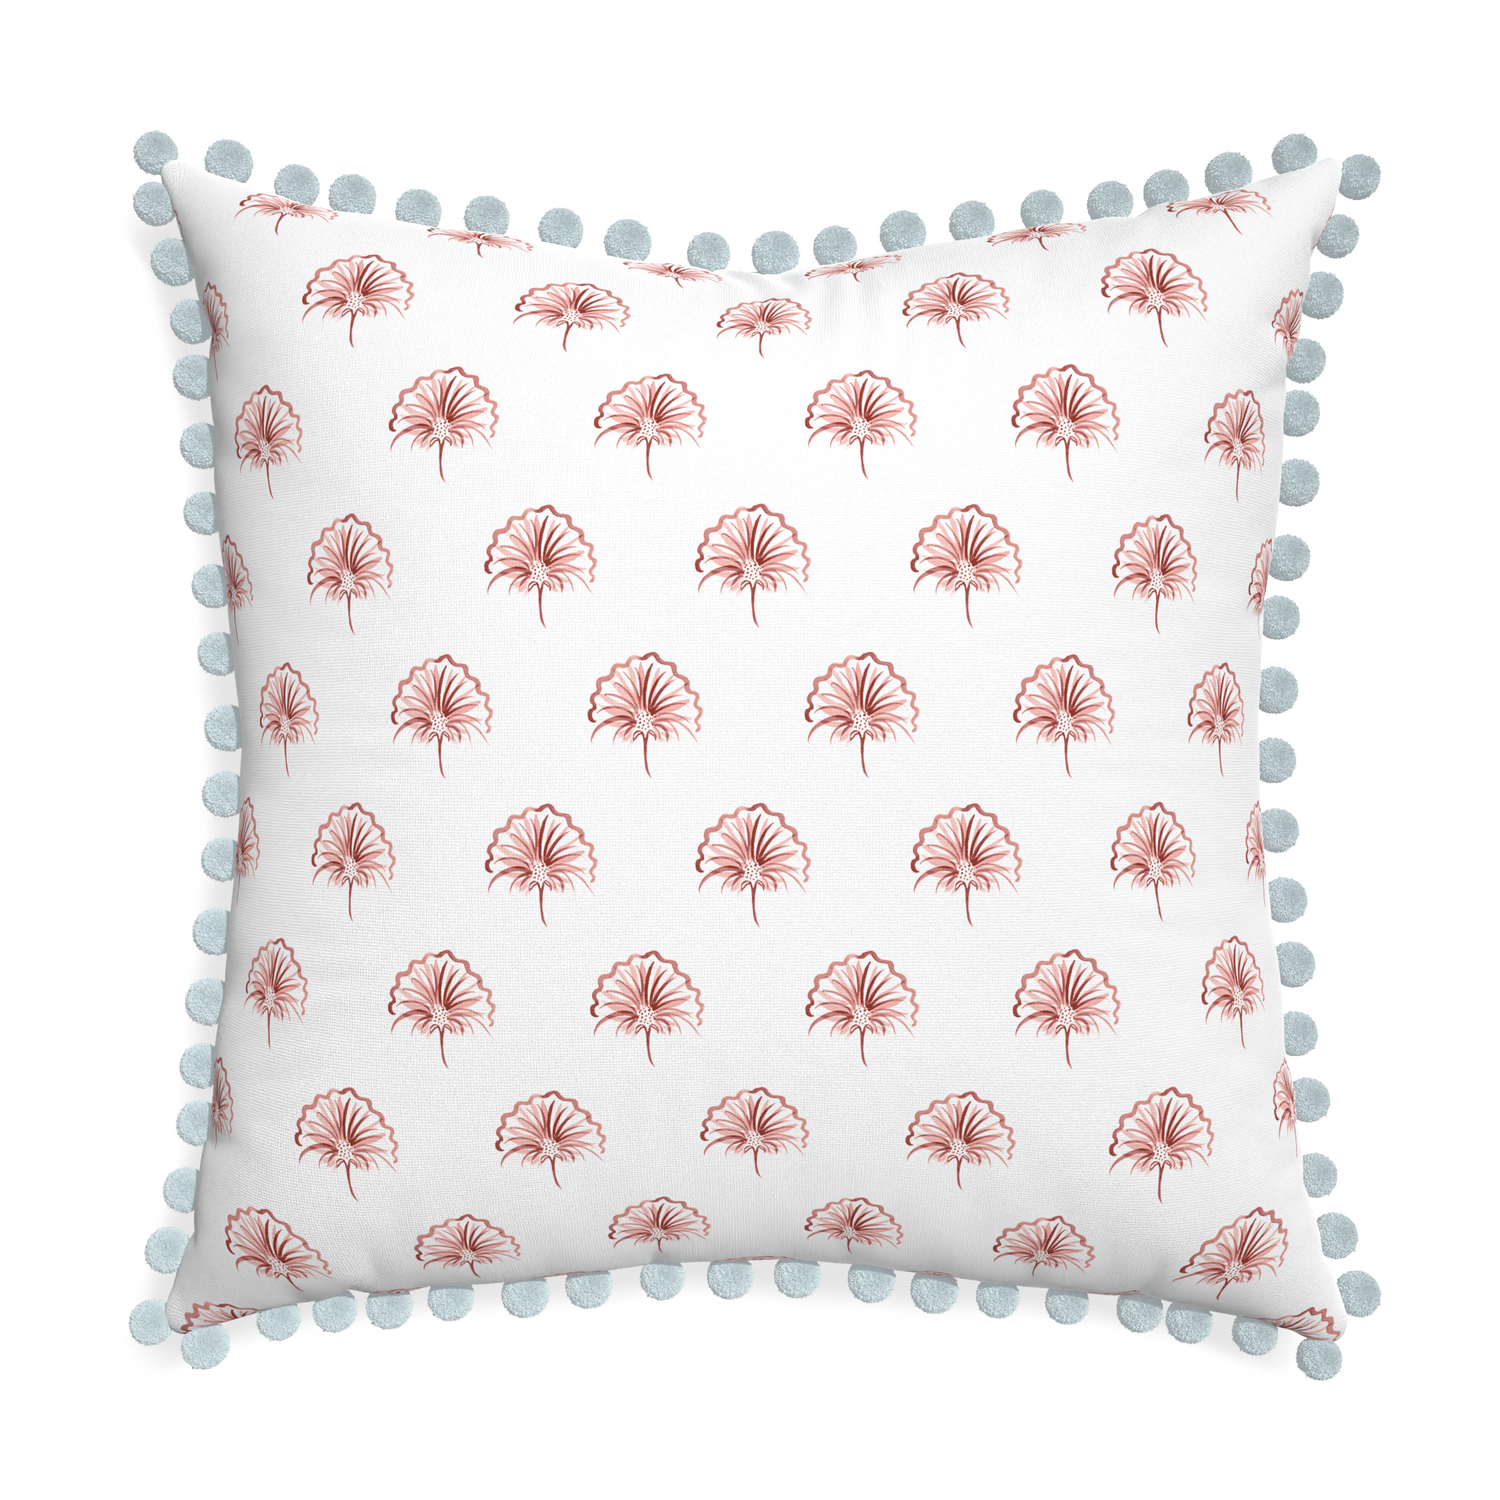 Euro-sham penelope rose custom pillow with powder pom pom on white background